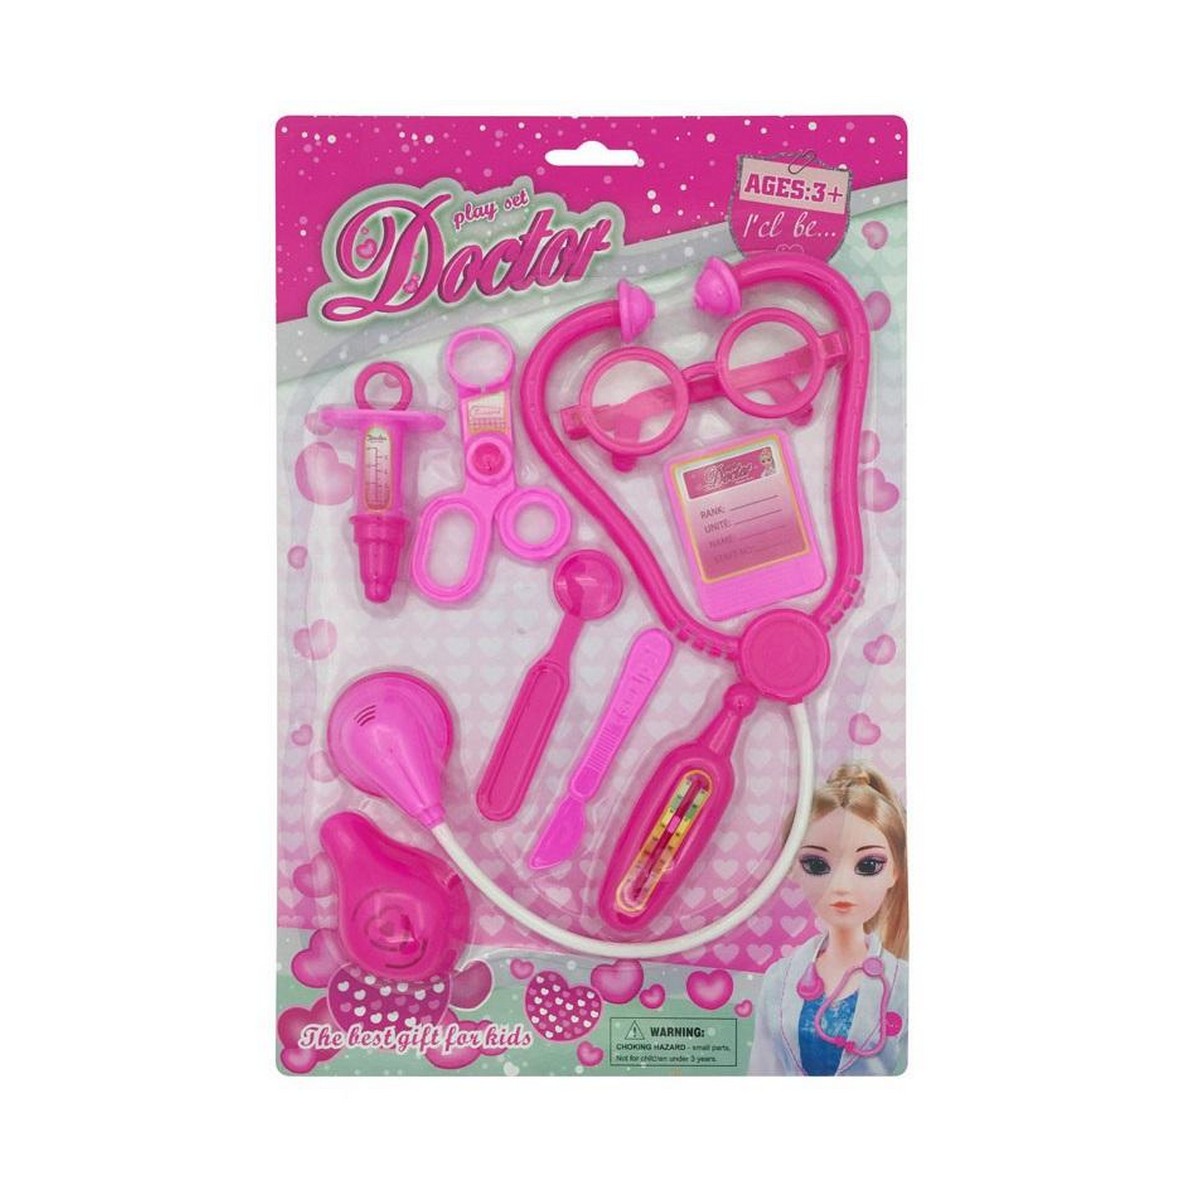 4 Pcs Set - Soft Mini Princess Doll Toys For Girls - 4 Inch - Colorful